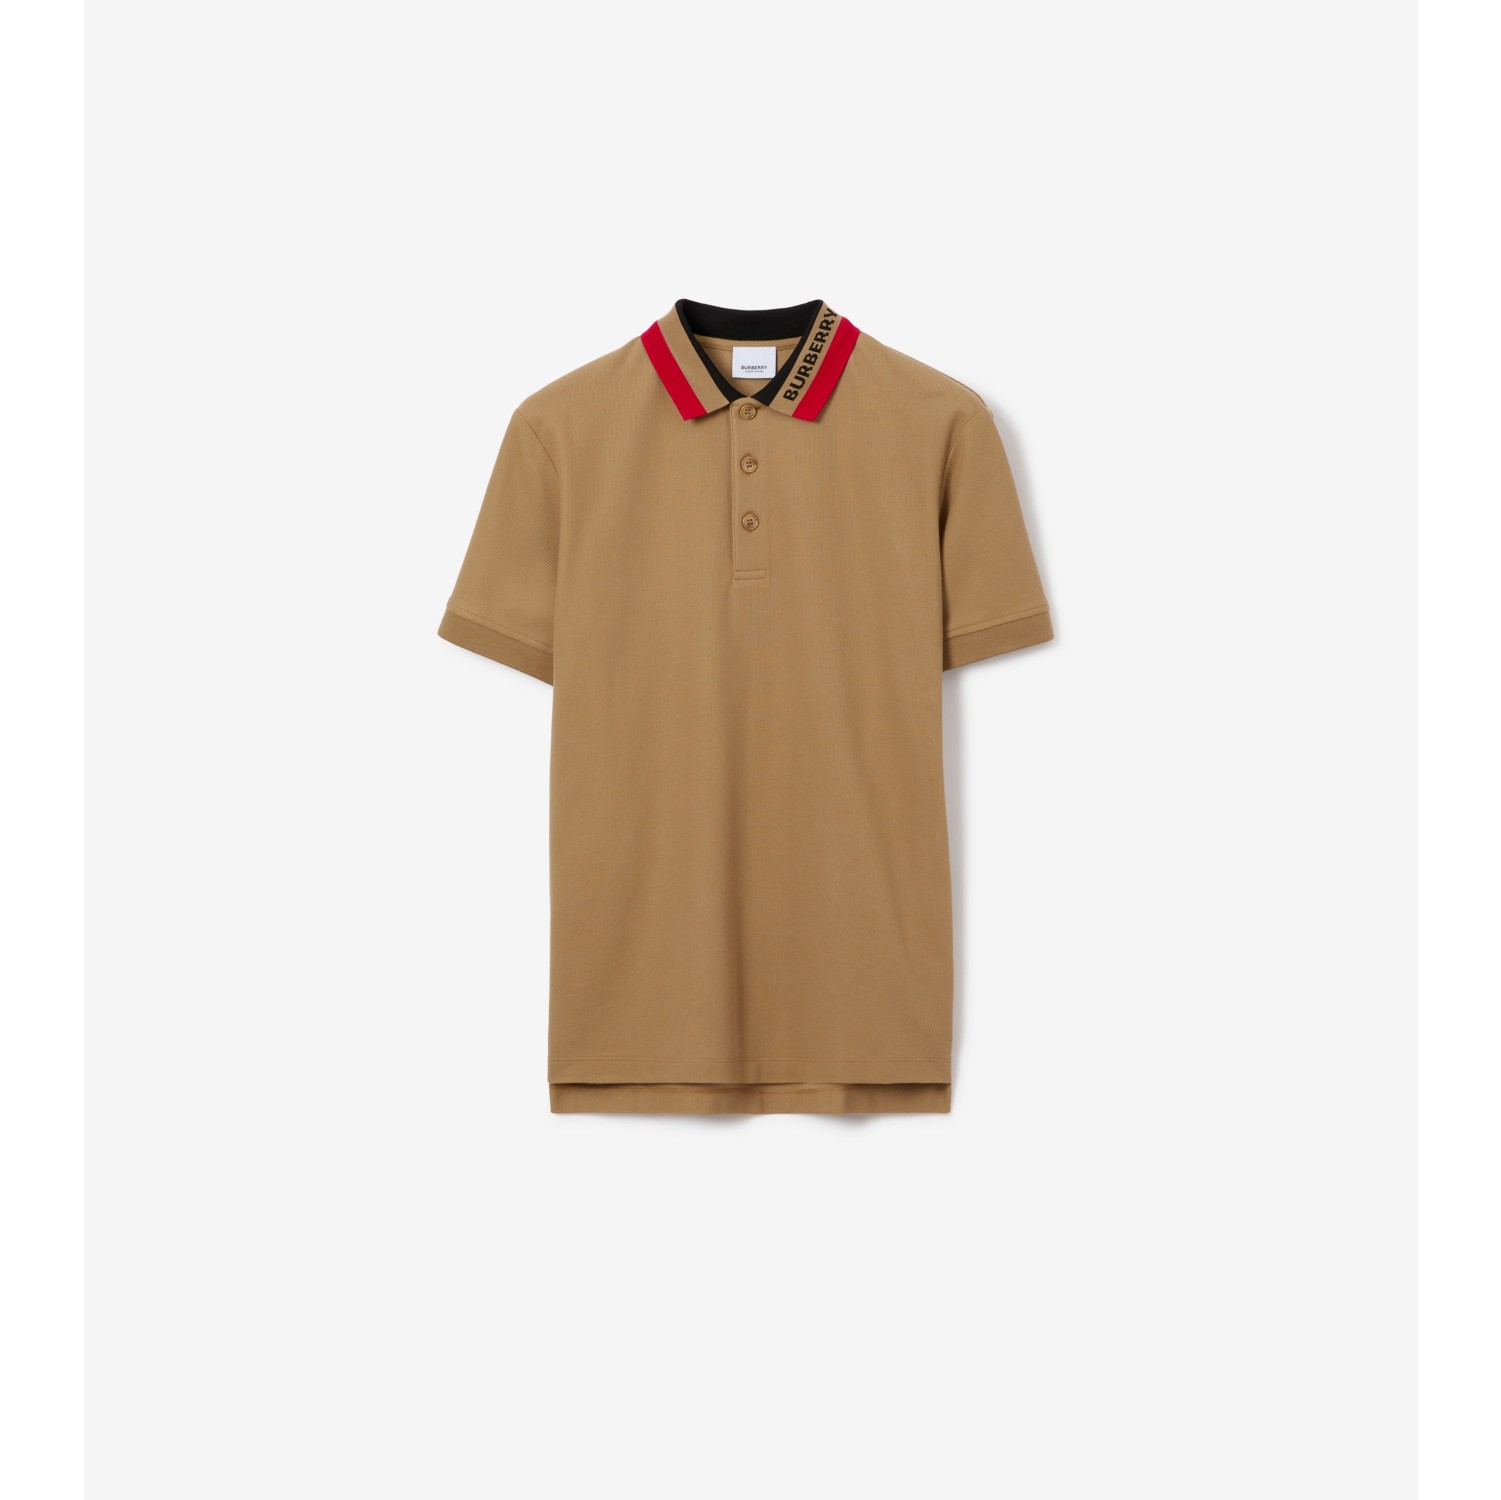 Burberry Men's Polo Shirt